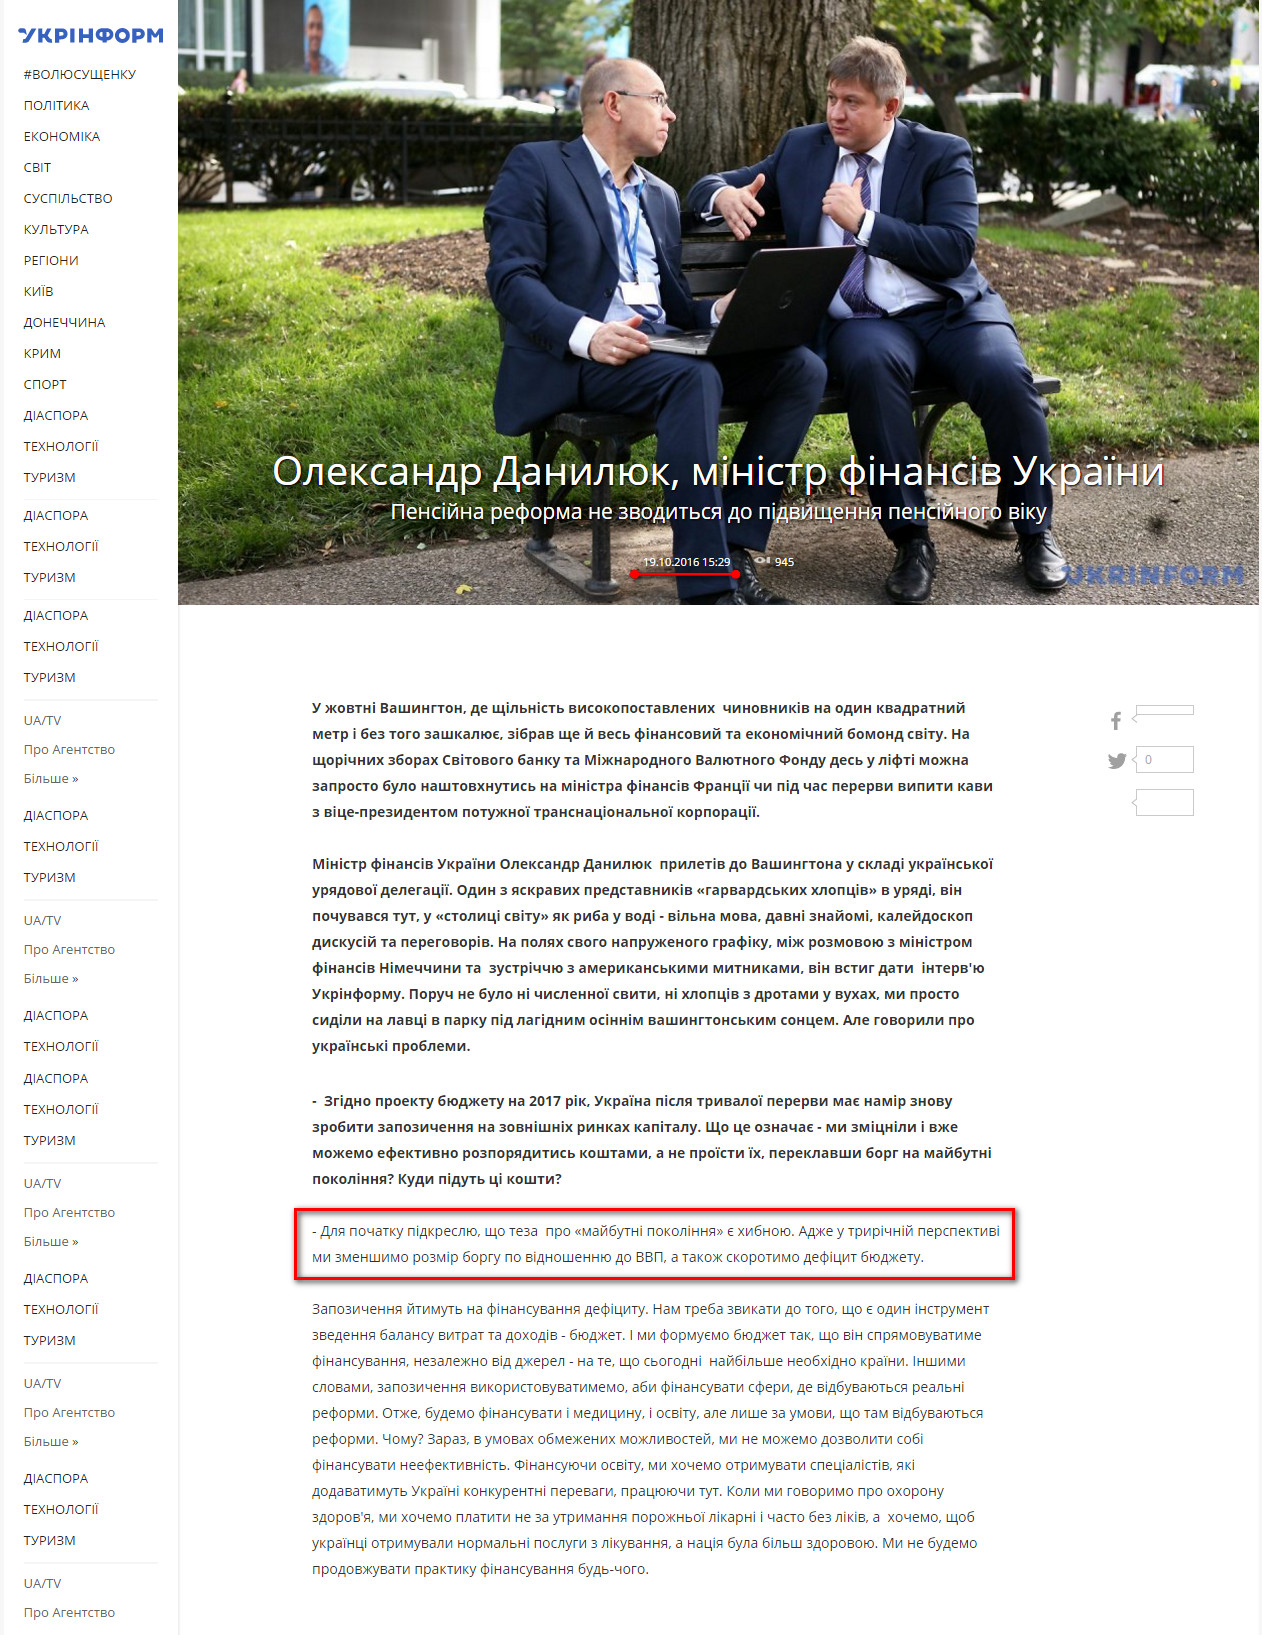 http://www.ukrinform.ua/rubric-economics/2104393-oleksandr-daniluk-ministr-finansiv-ukraini.html